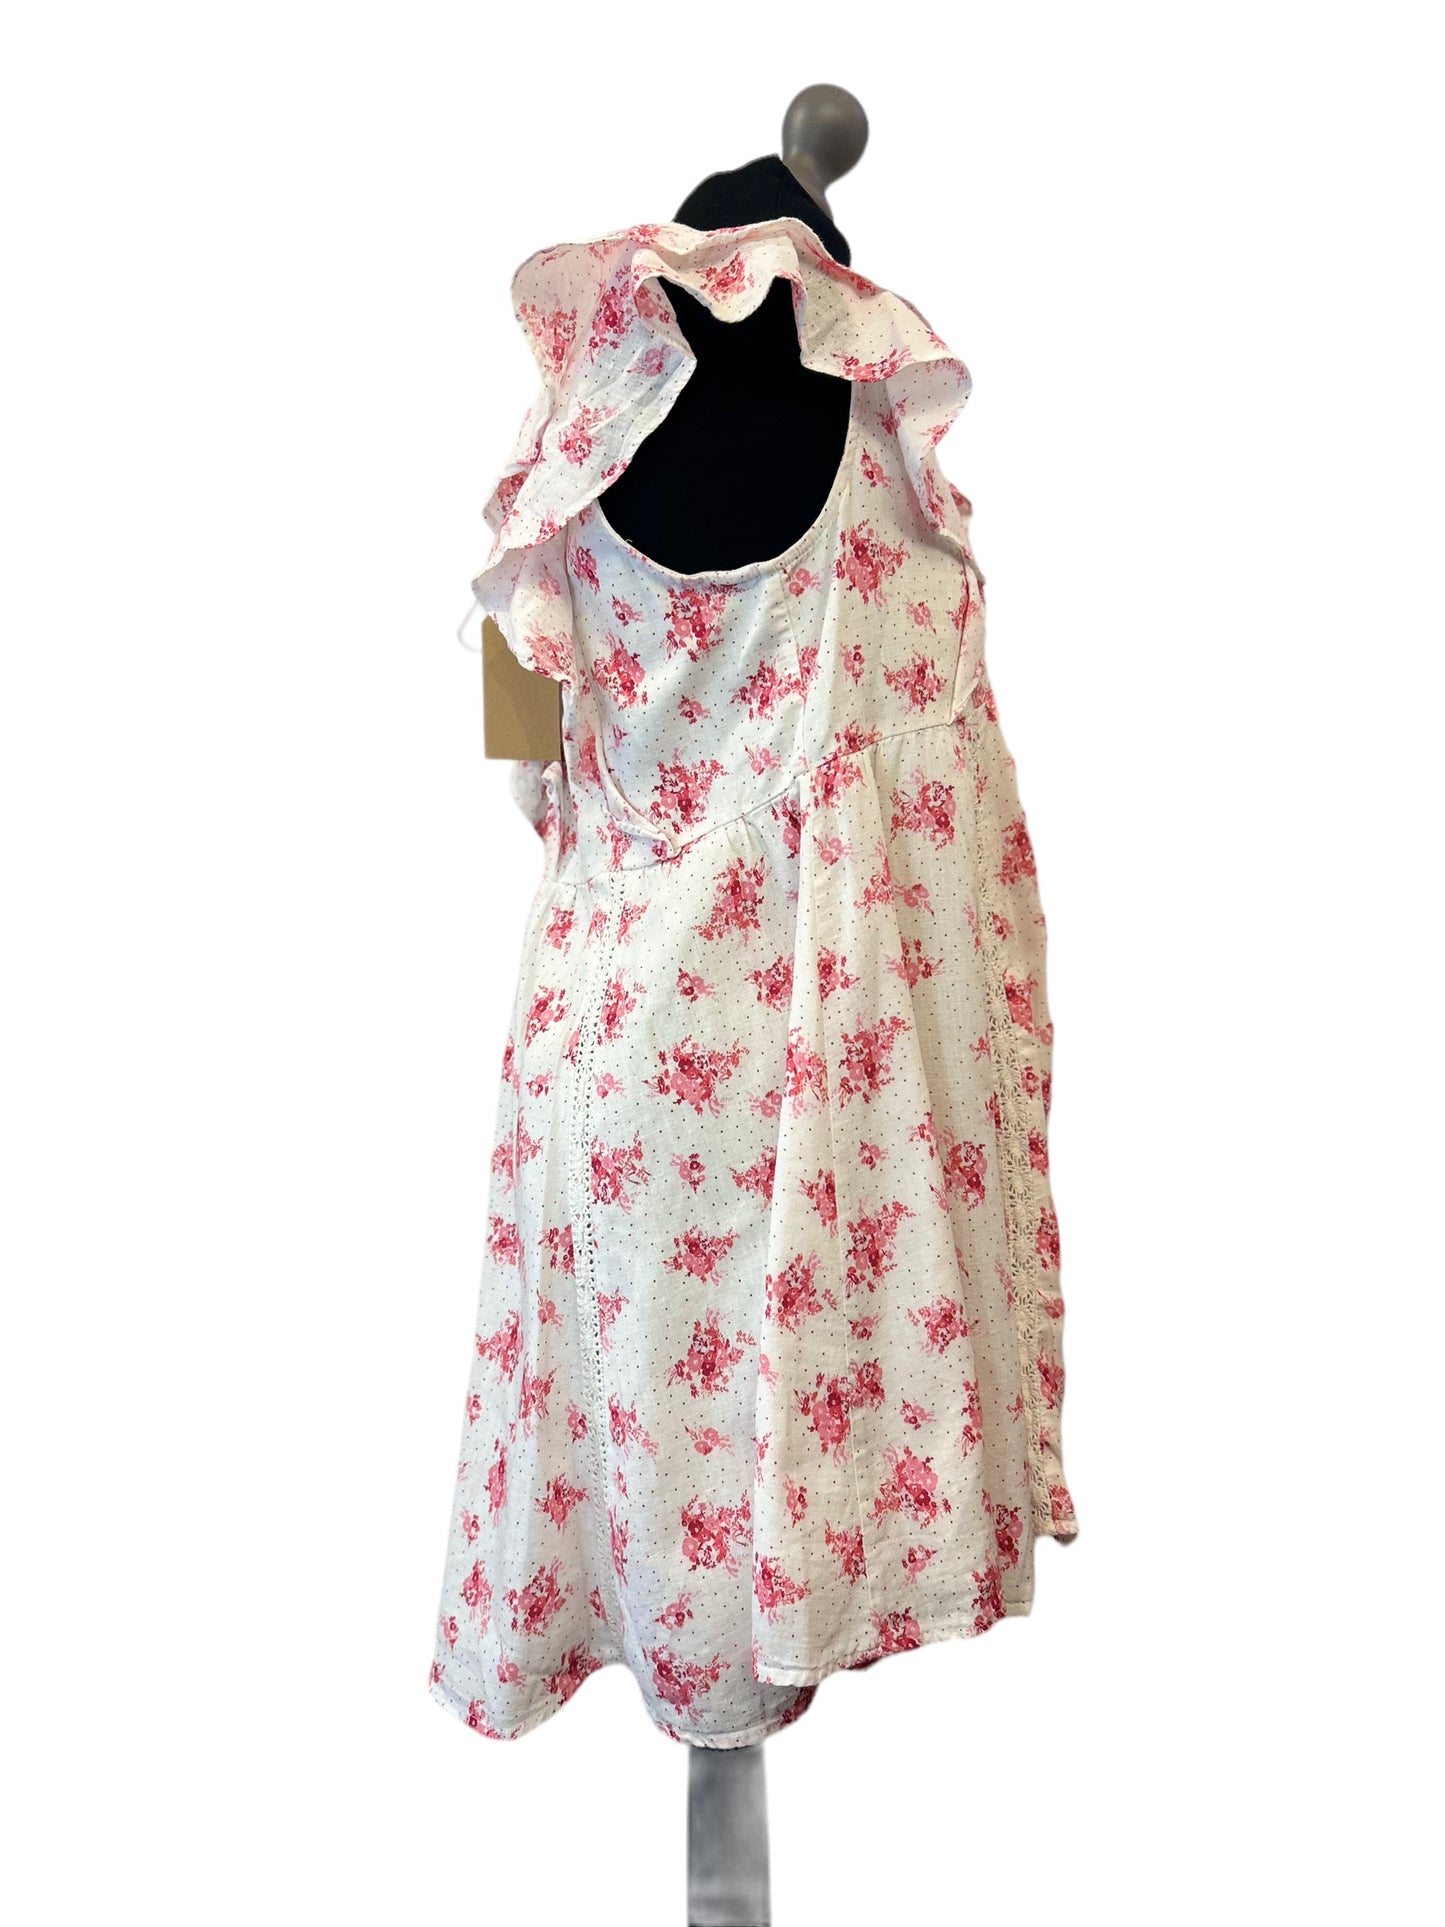 River island pink floral dress Medium